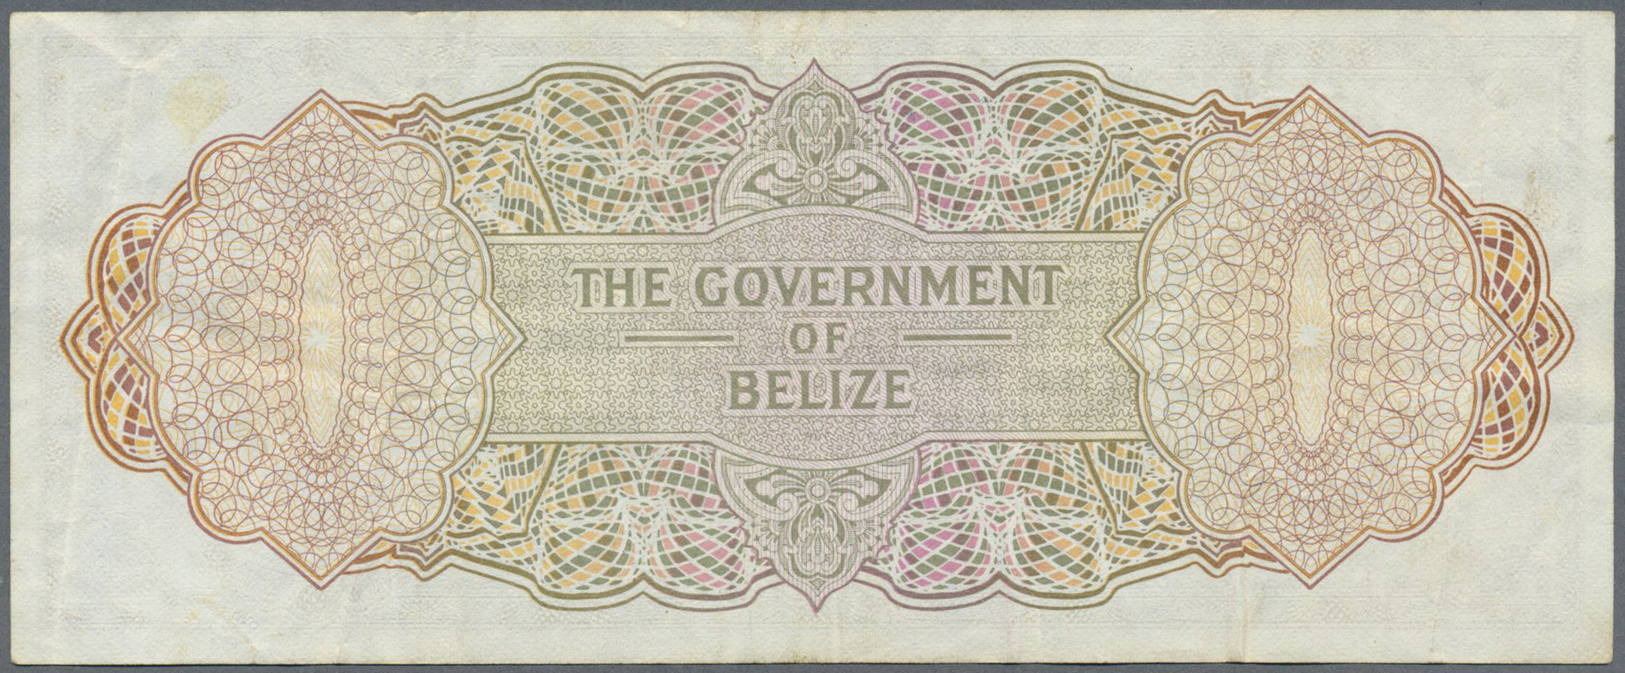 00290 Belize: Belize: 20 Dollars 1976, P.37c With Several Folds And Minor Spots, Still Nice Original Shape And Bright Co - Belize